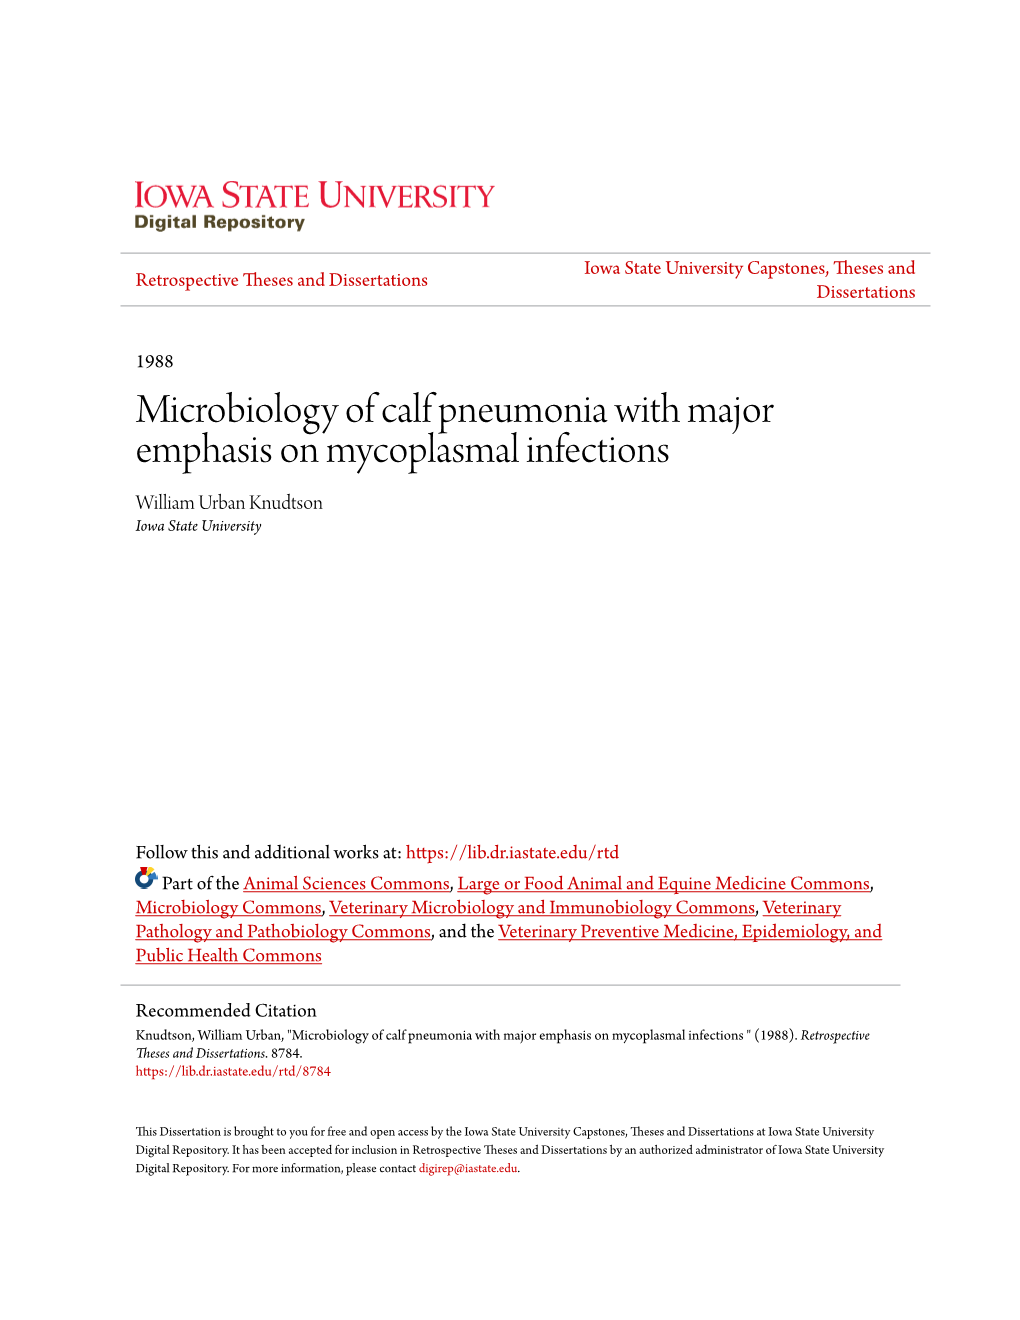 Microbiology of Calf Pneumonia with Major Emphasis on Mycoplasmal Infections William Urban Knudtson Iowa State University